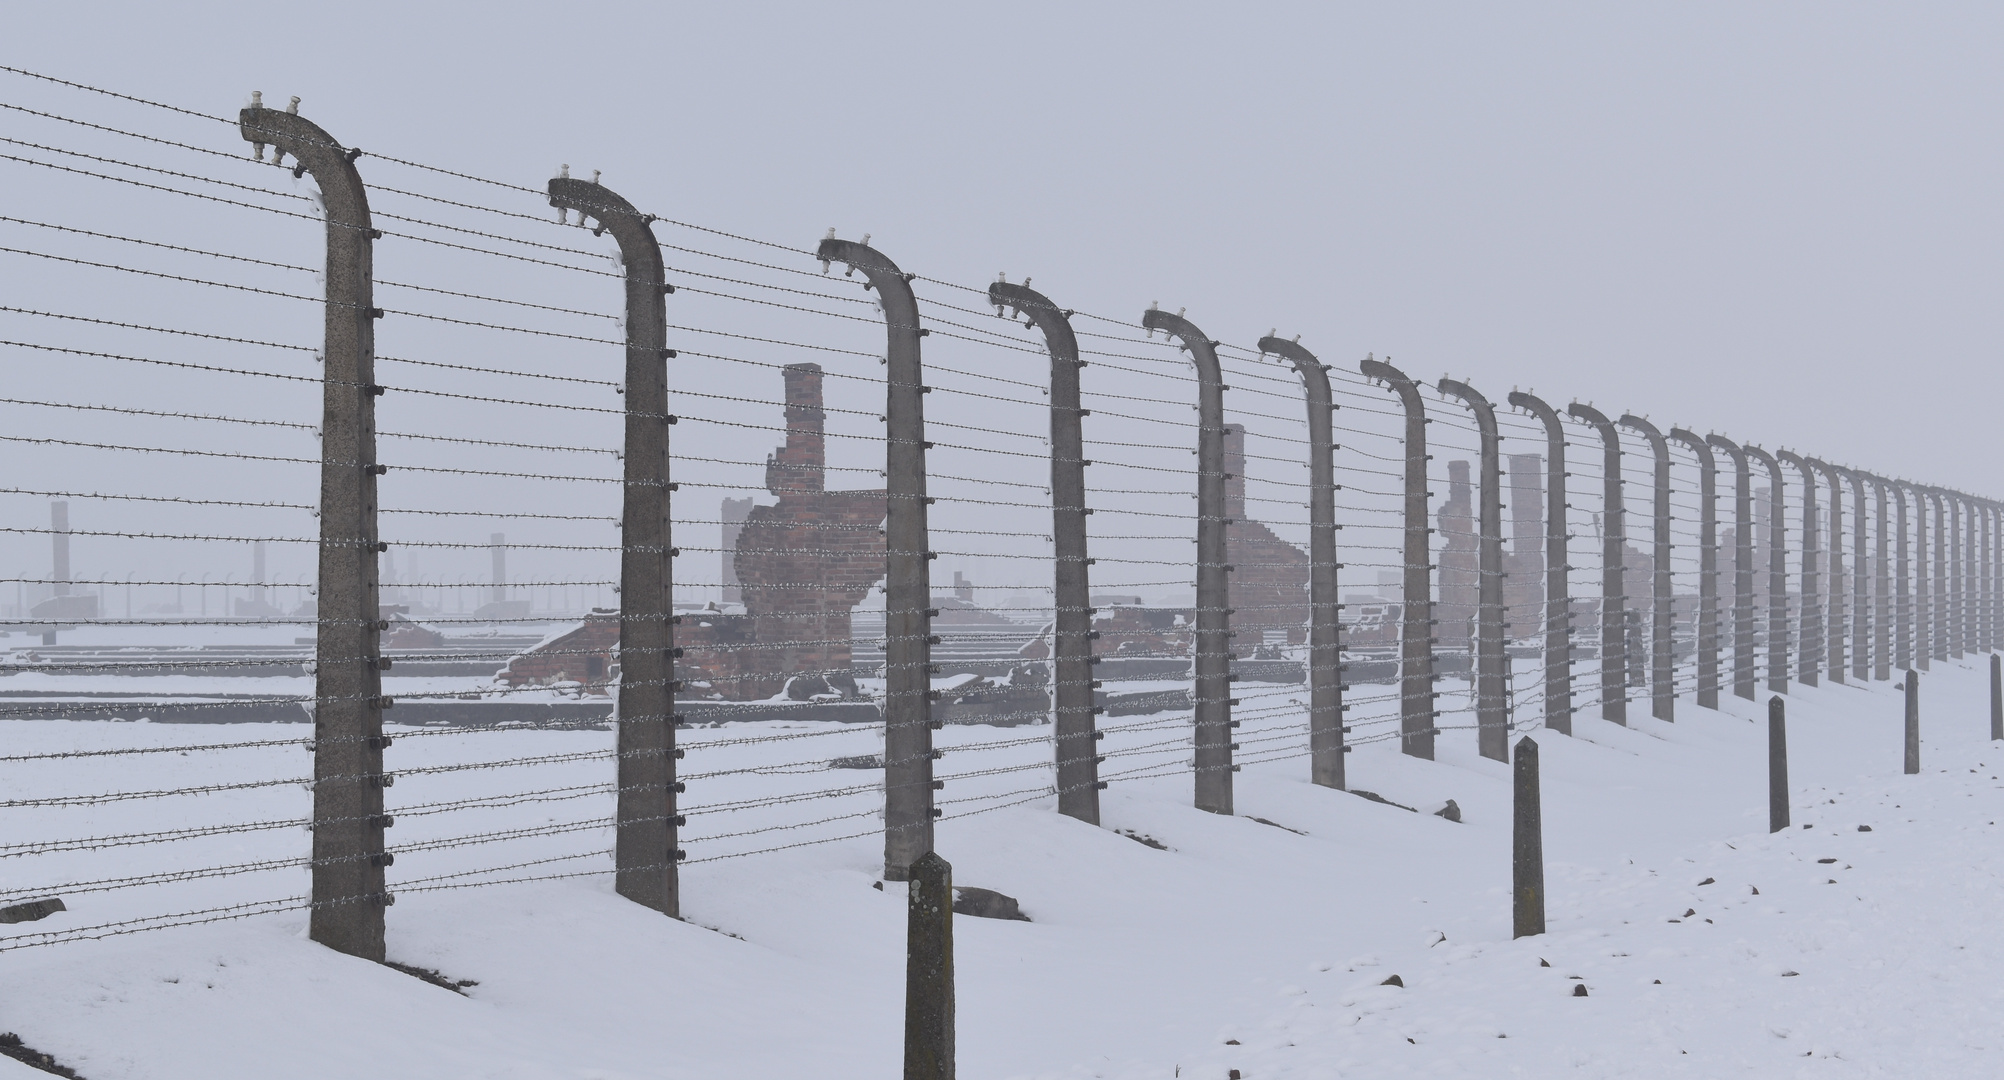 Auschwitz-Birkenau 2019 (19)